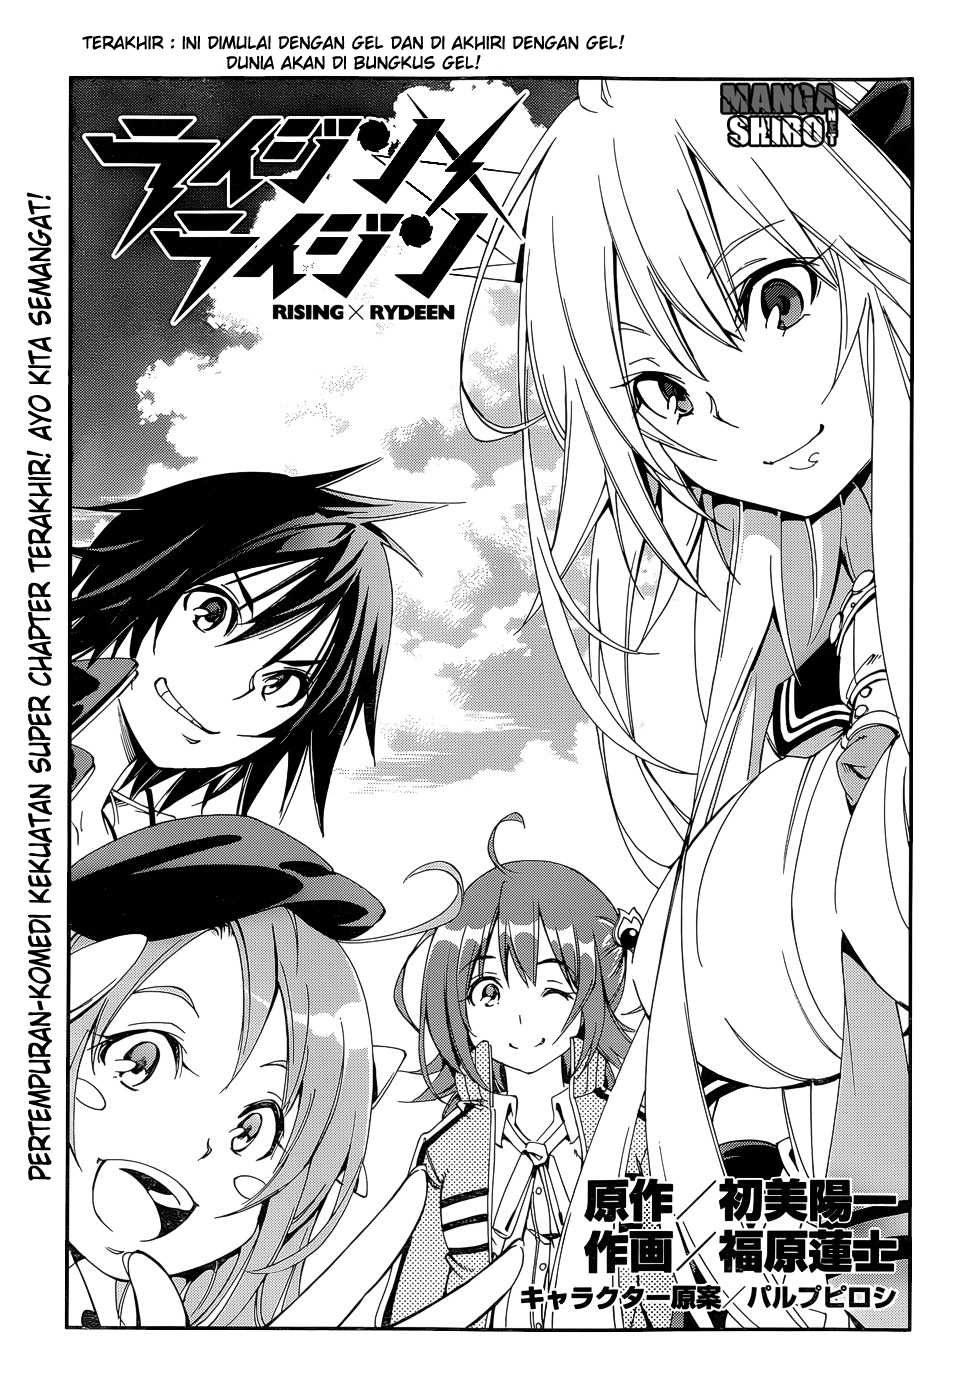 Baca Manga Rising x Rydeen Chapter 29-End Gambar 2